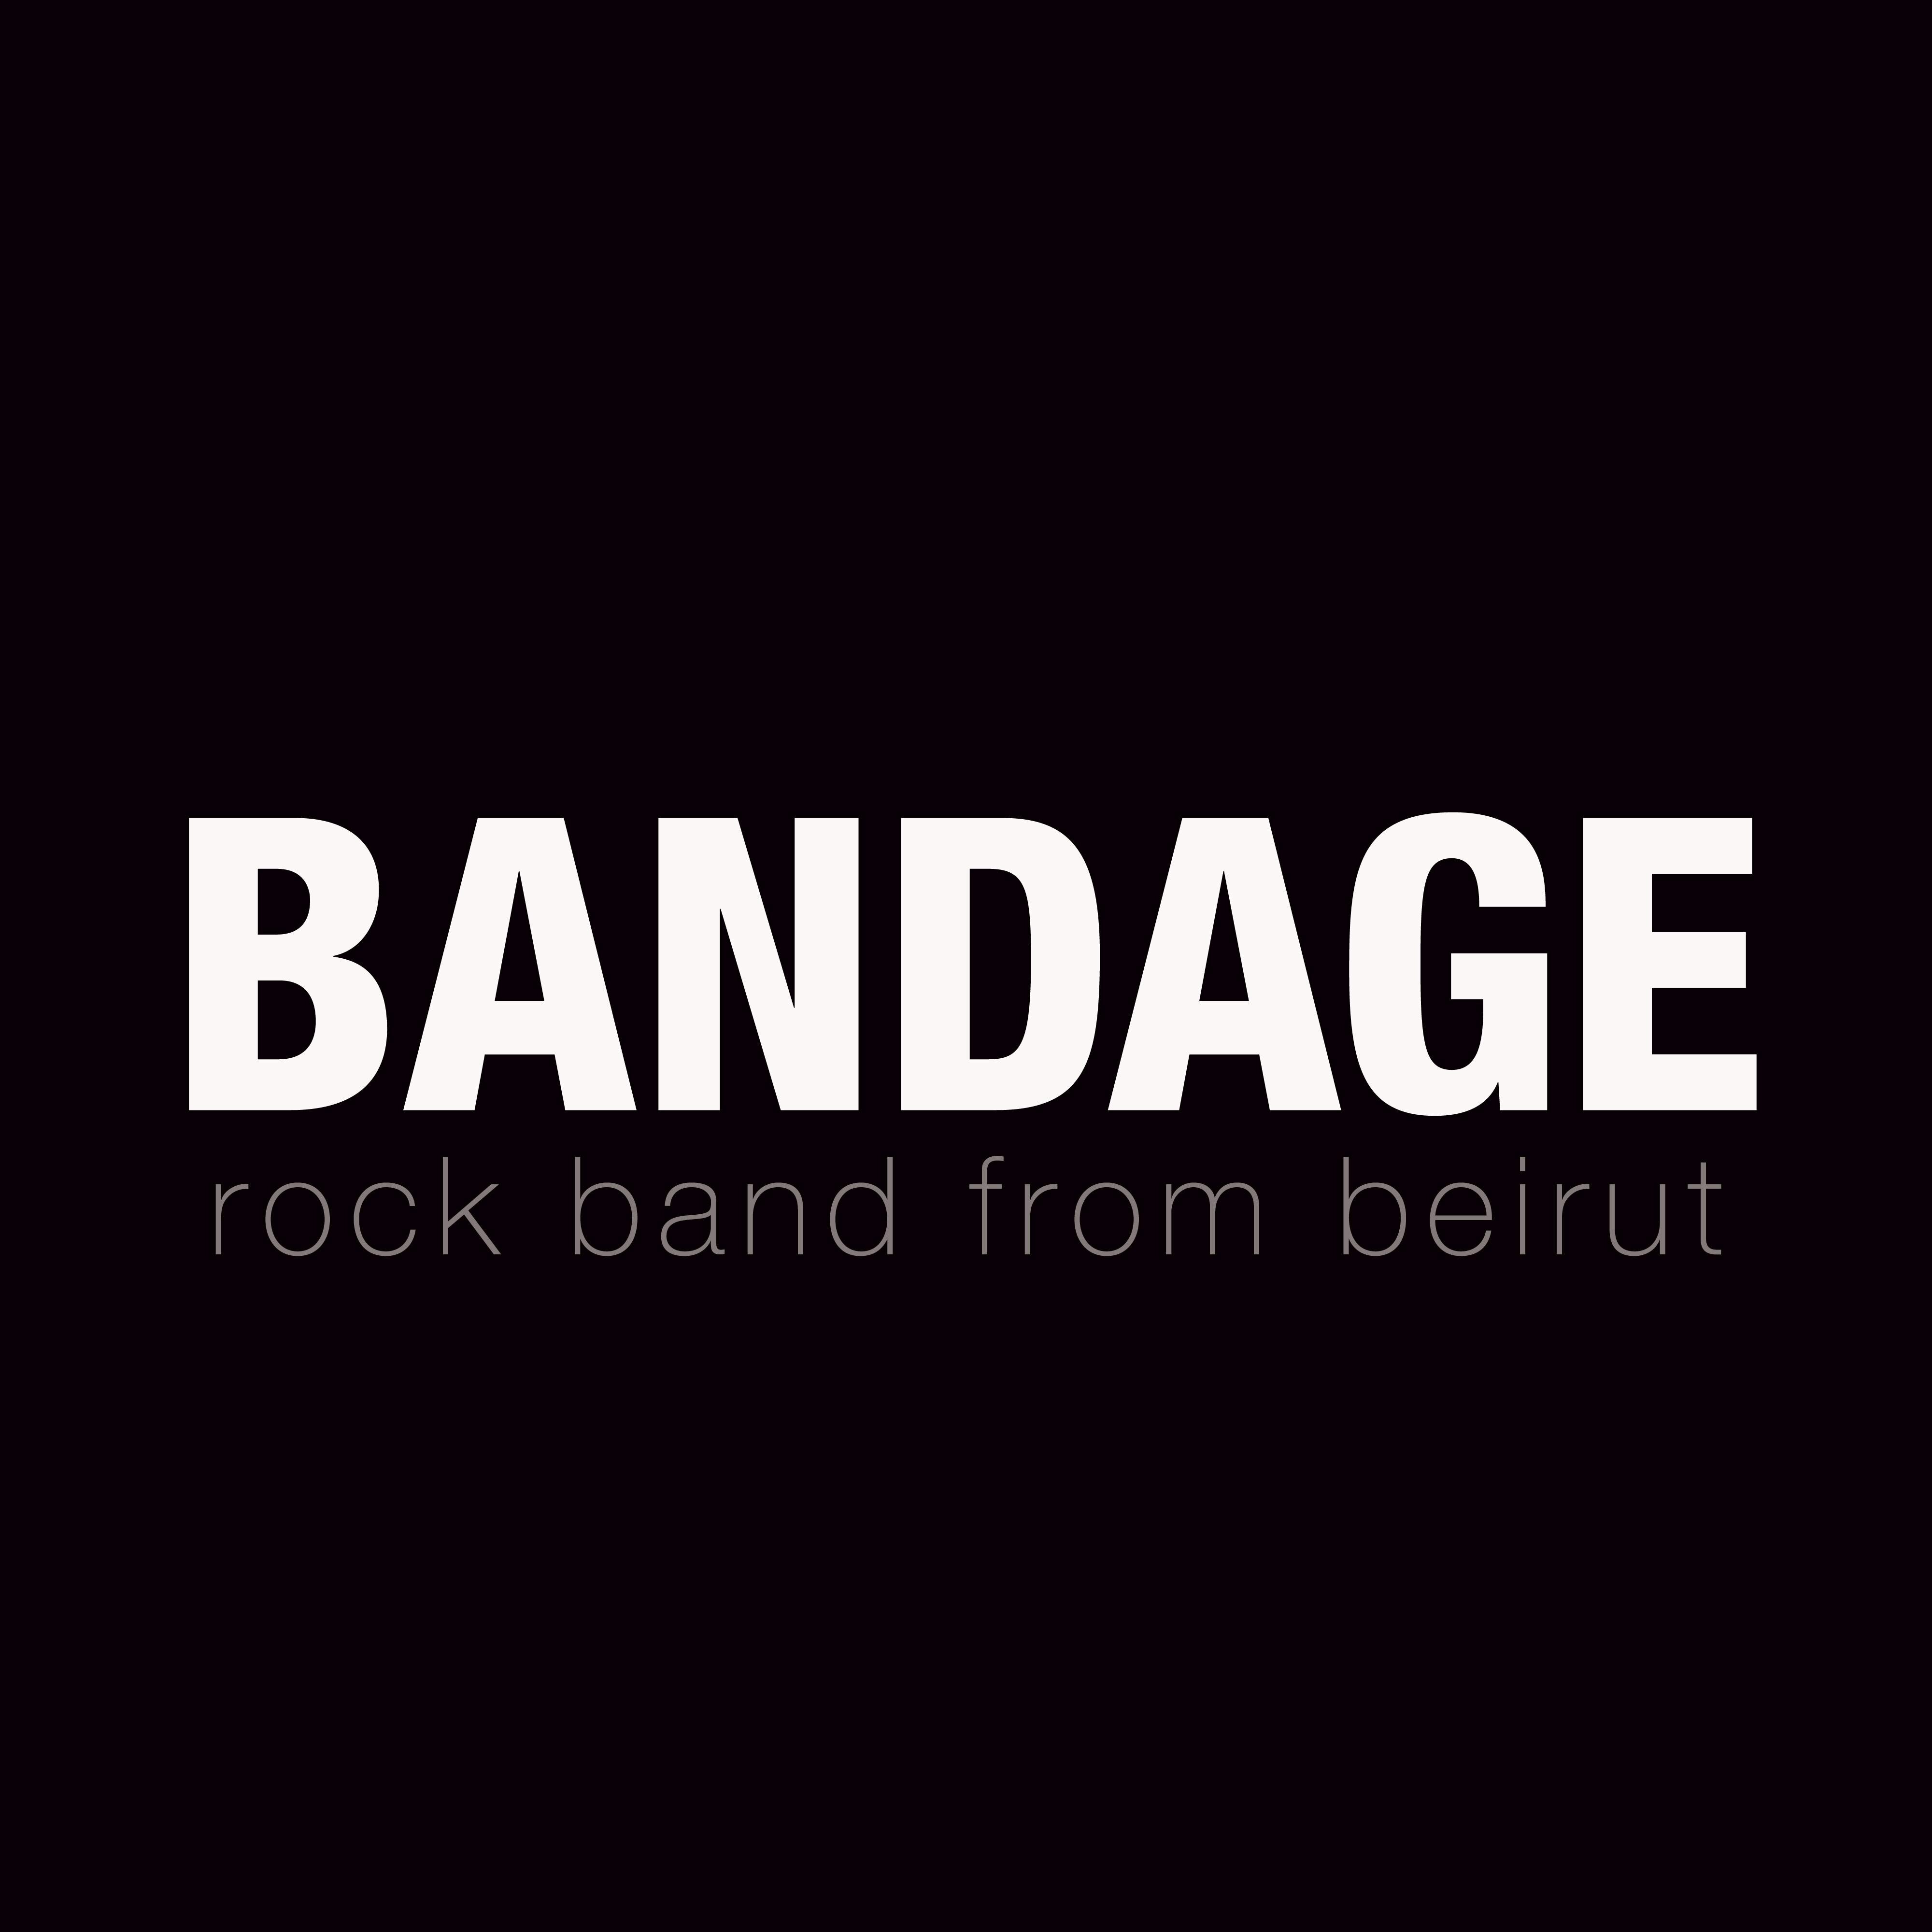 Lebanese Rock Band 
http://t.co/F6IX00RI